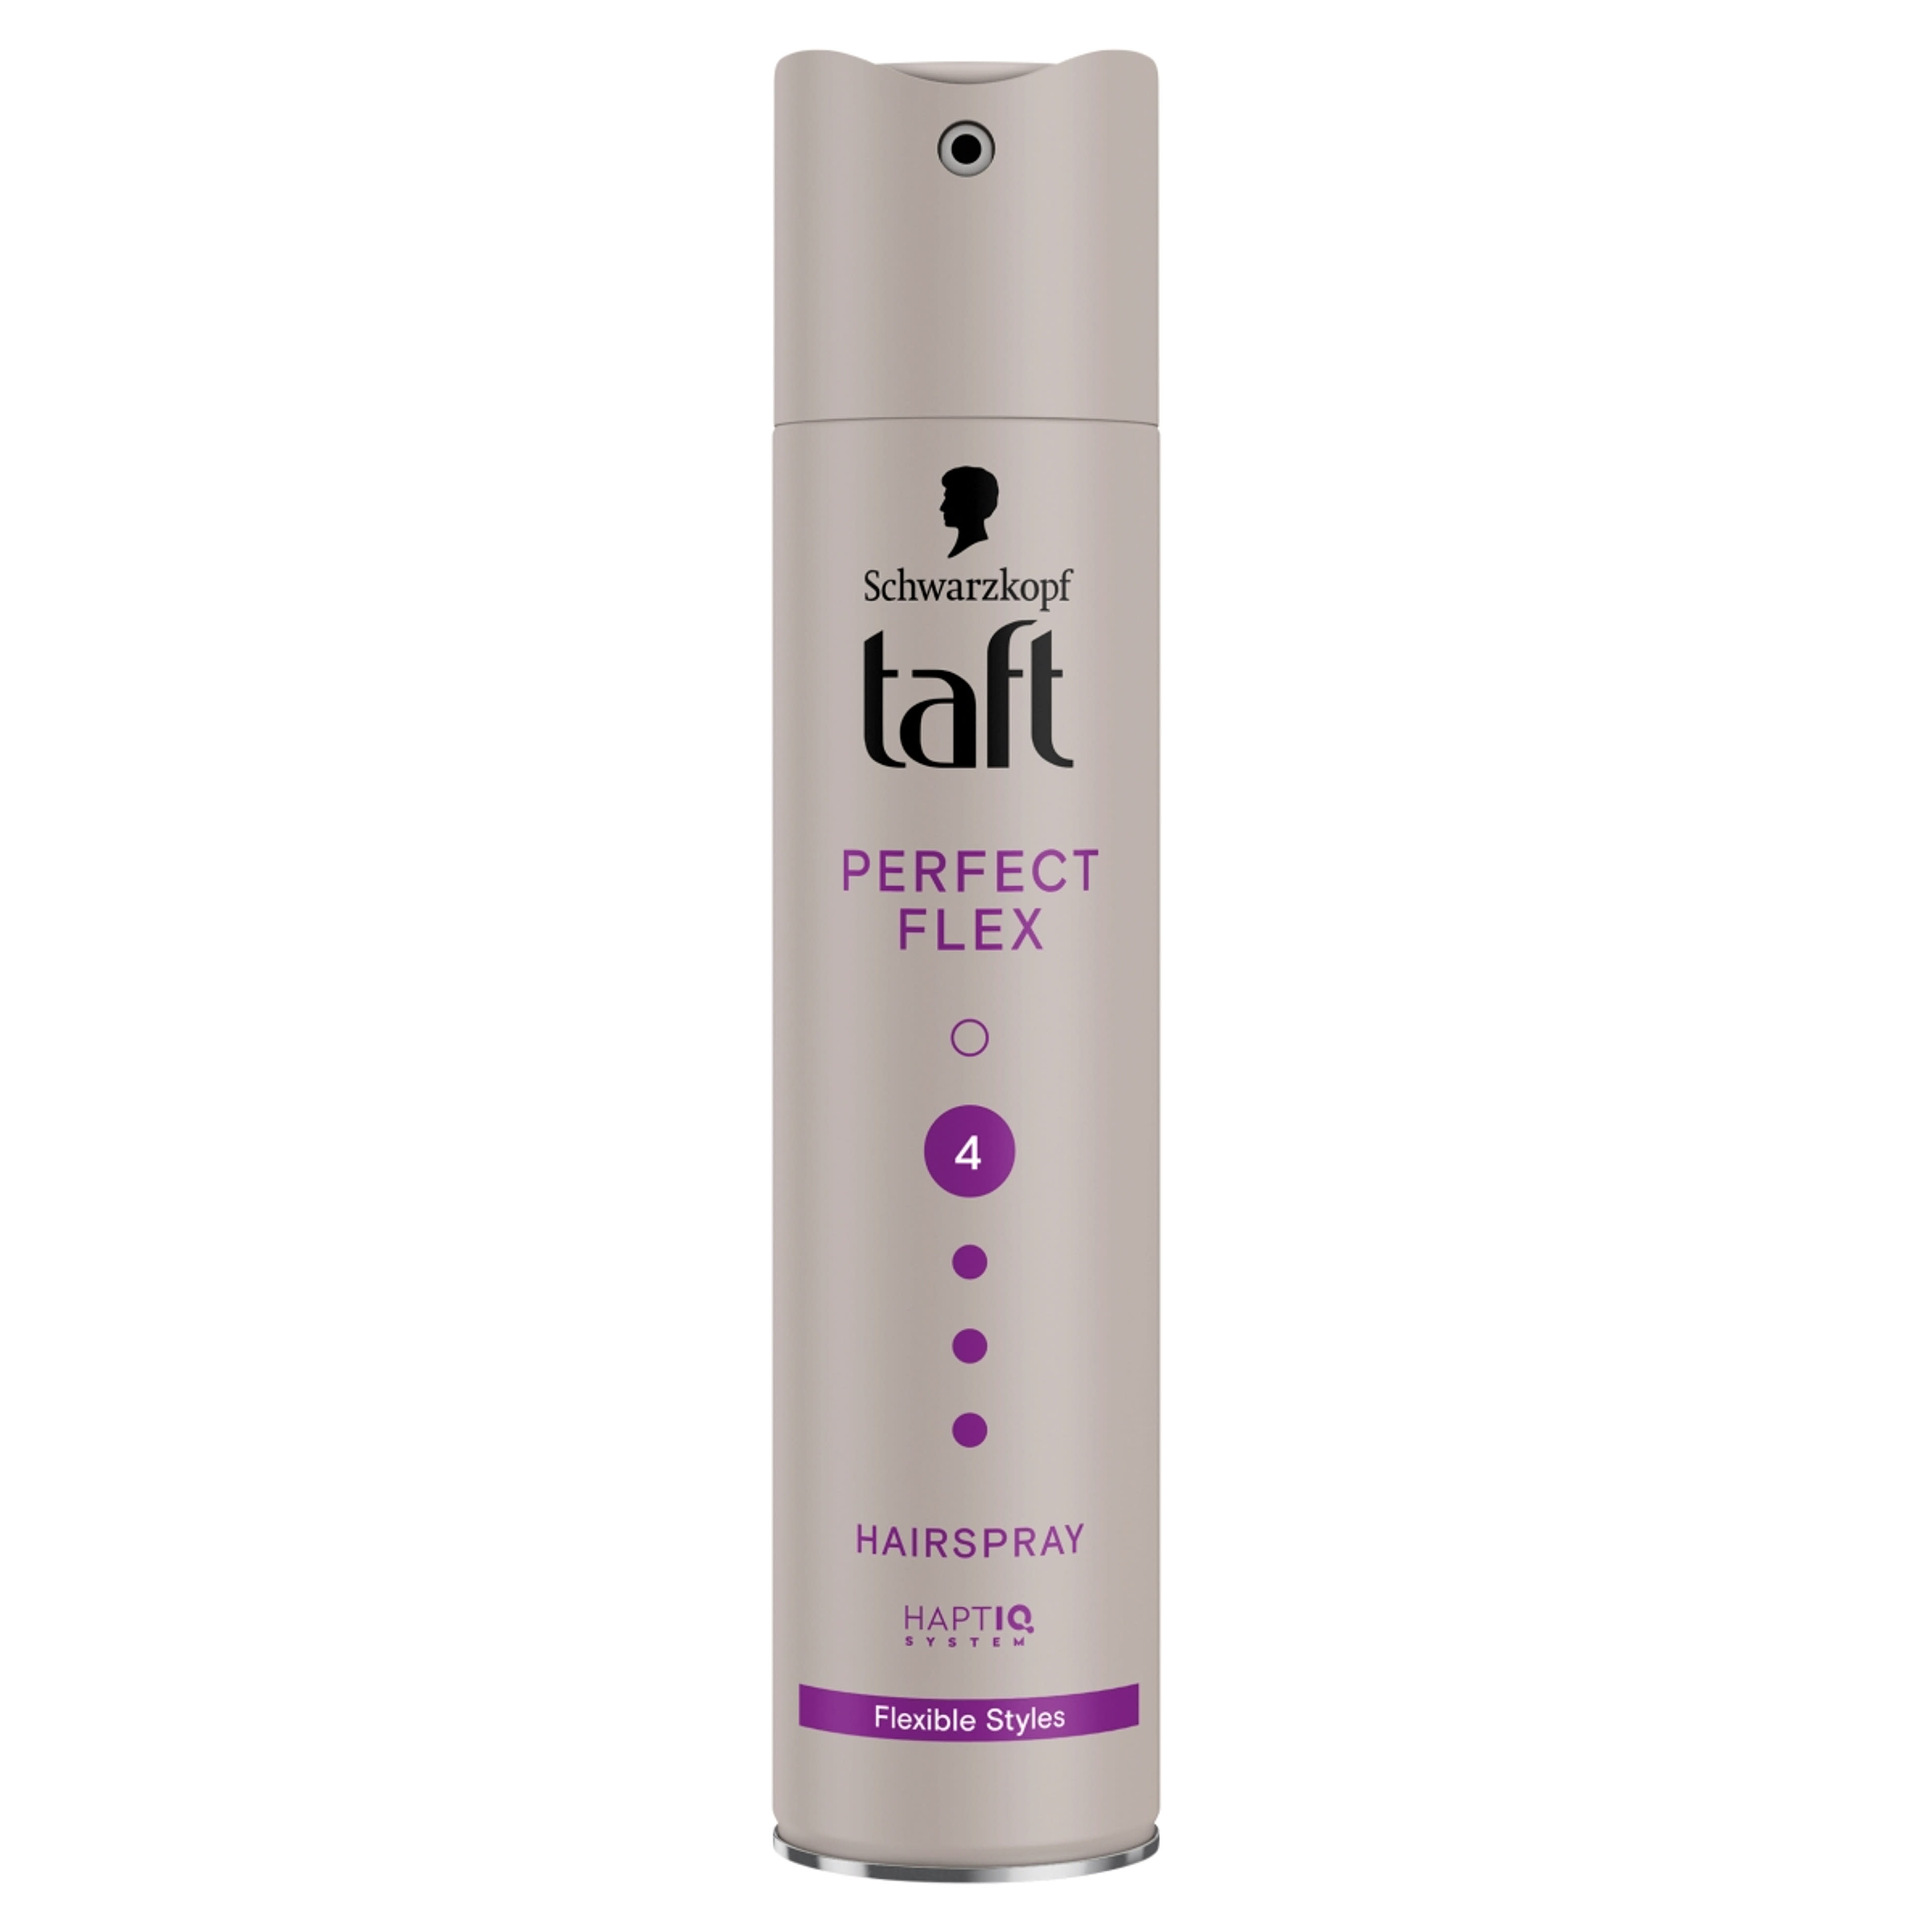 Taft Perfect Flex hajlakk - 250 ml-1